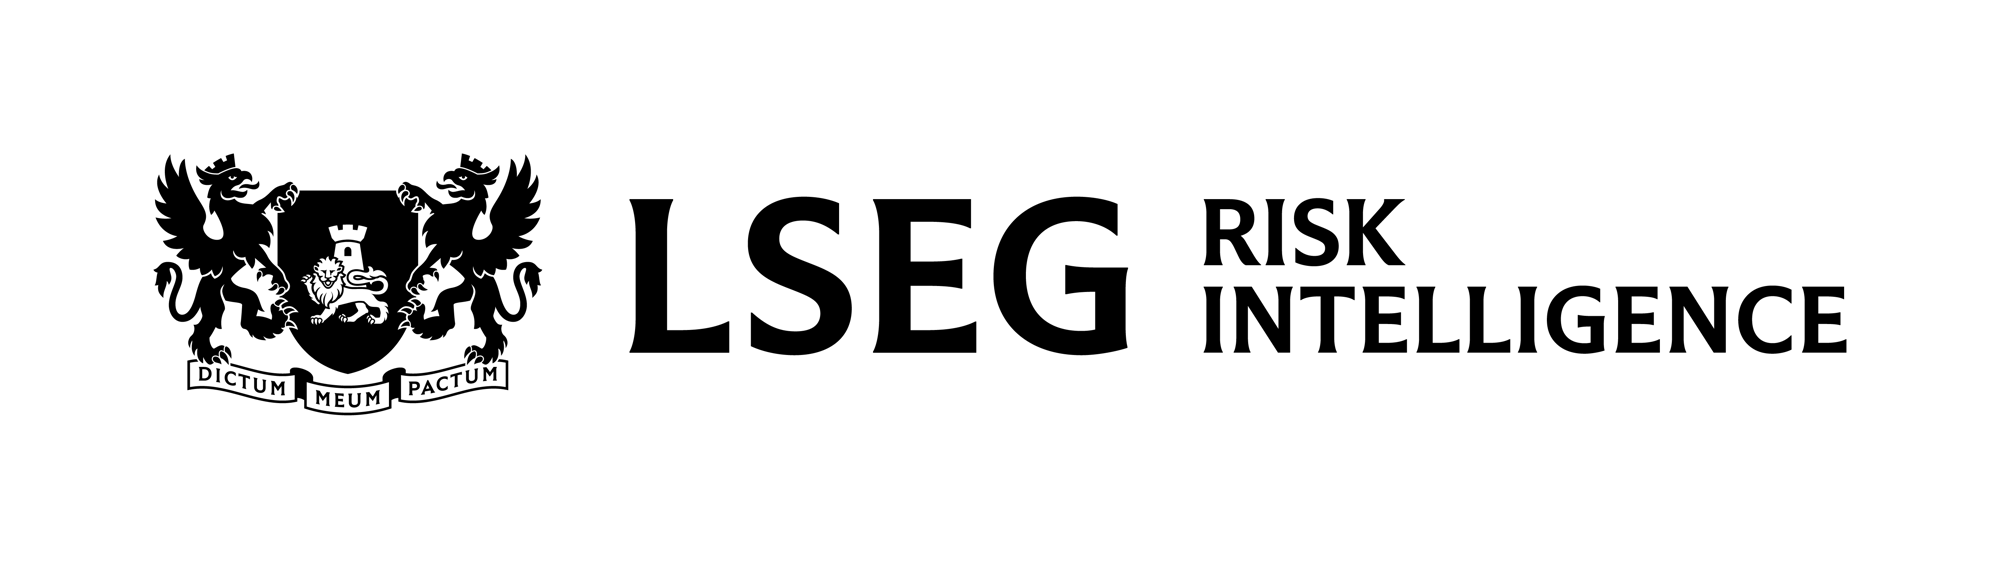 lseg_risk_logo_hrz_rgb_blk_pos